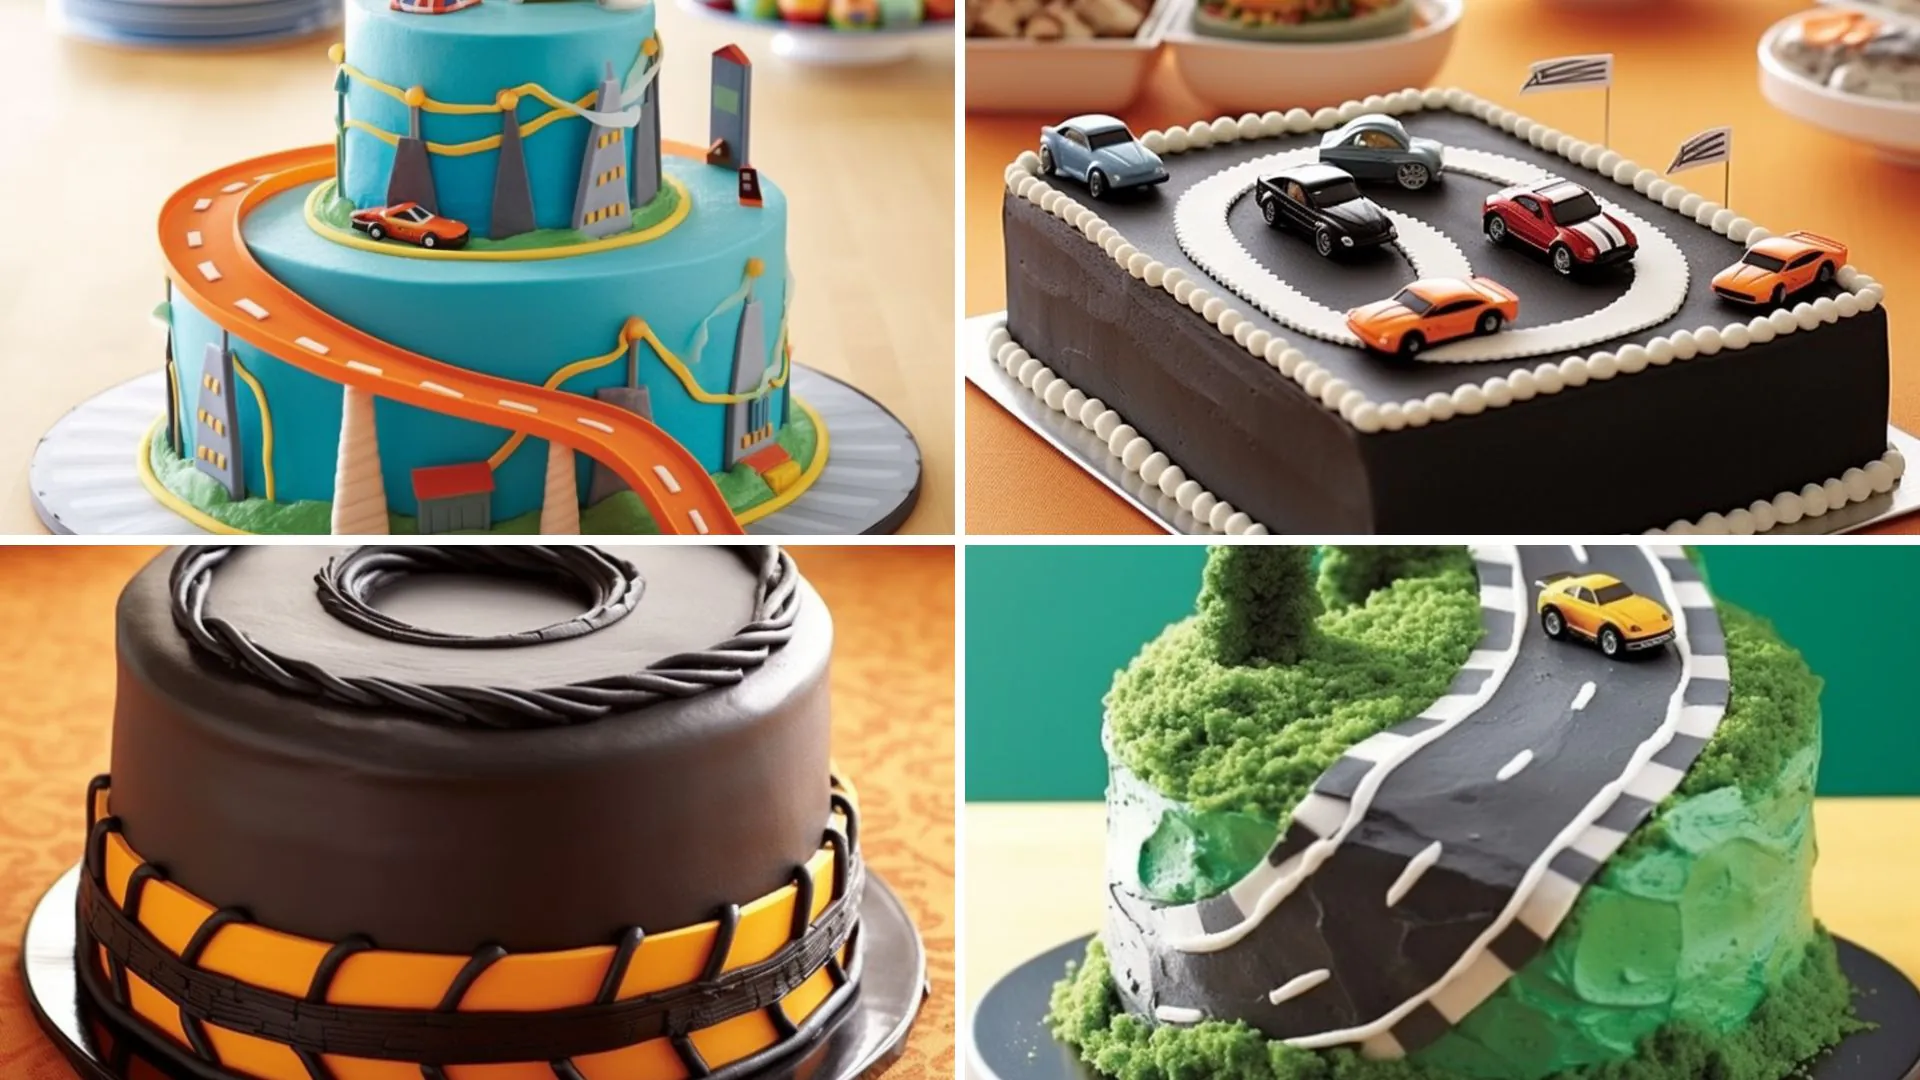 hot wheels themed birthday cake ideas